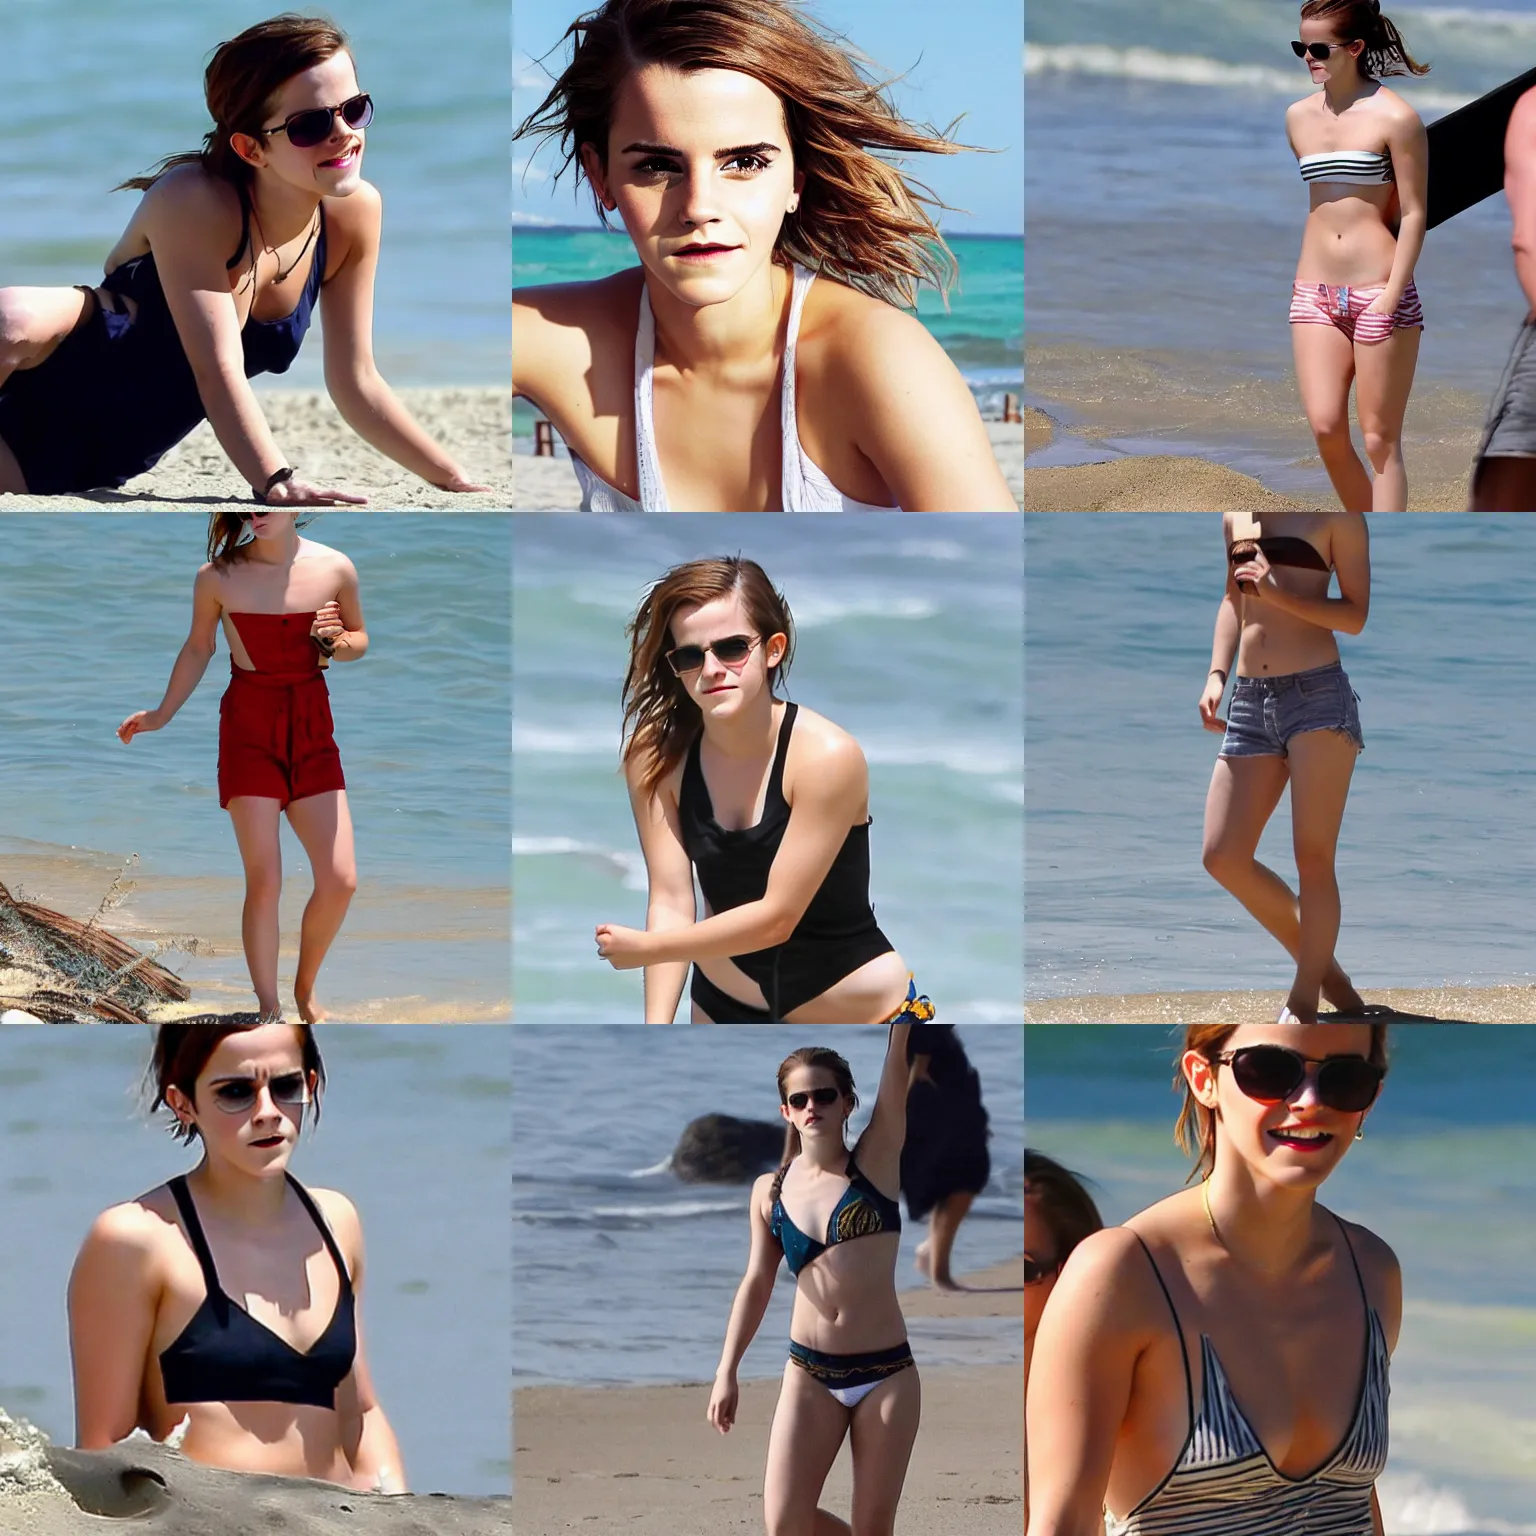 Prompt: emma watson enjoying a summer day at the beach